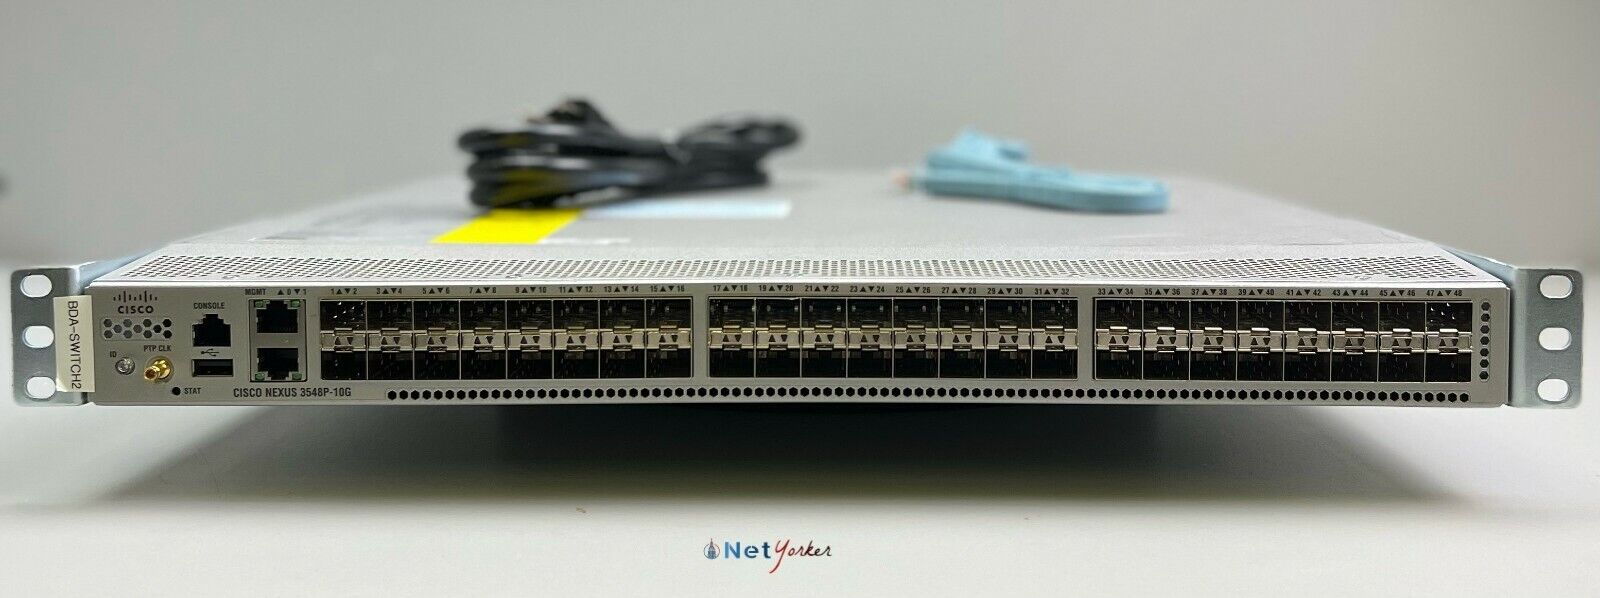 Cisco Nexus N3K-C3548P-10G 3548 48 Port 10Gb SFP+ Switch - Same